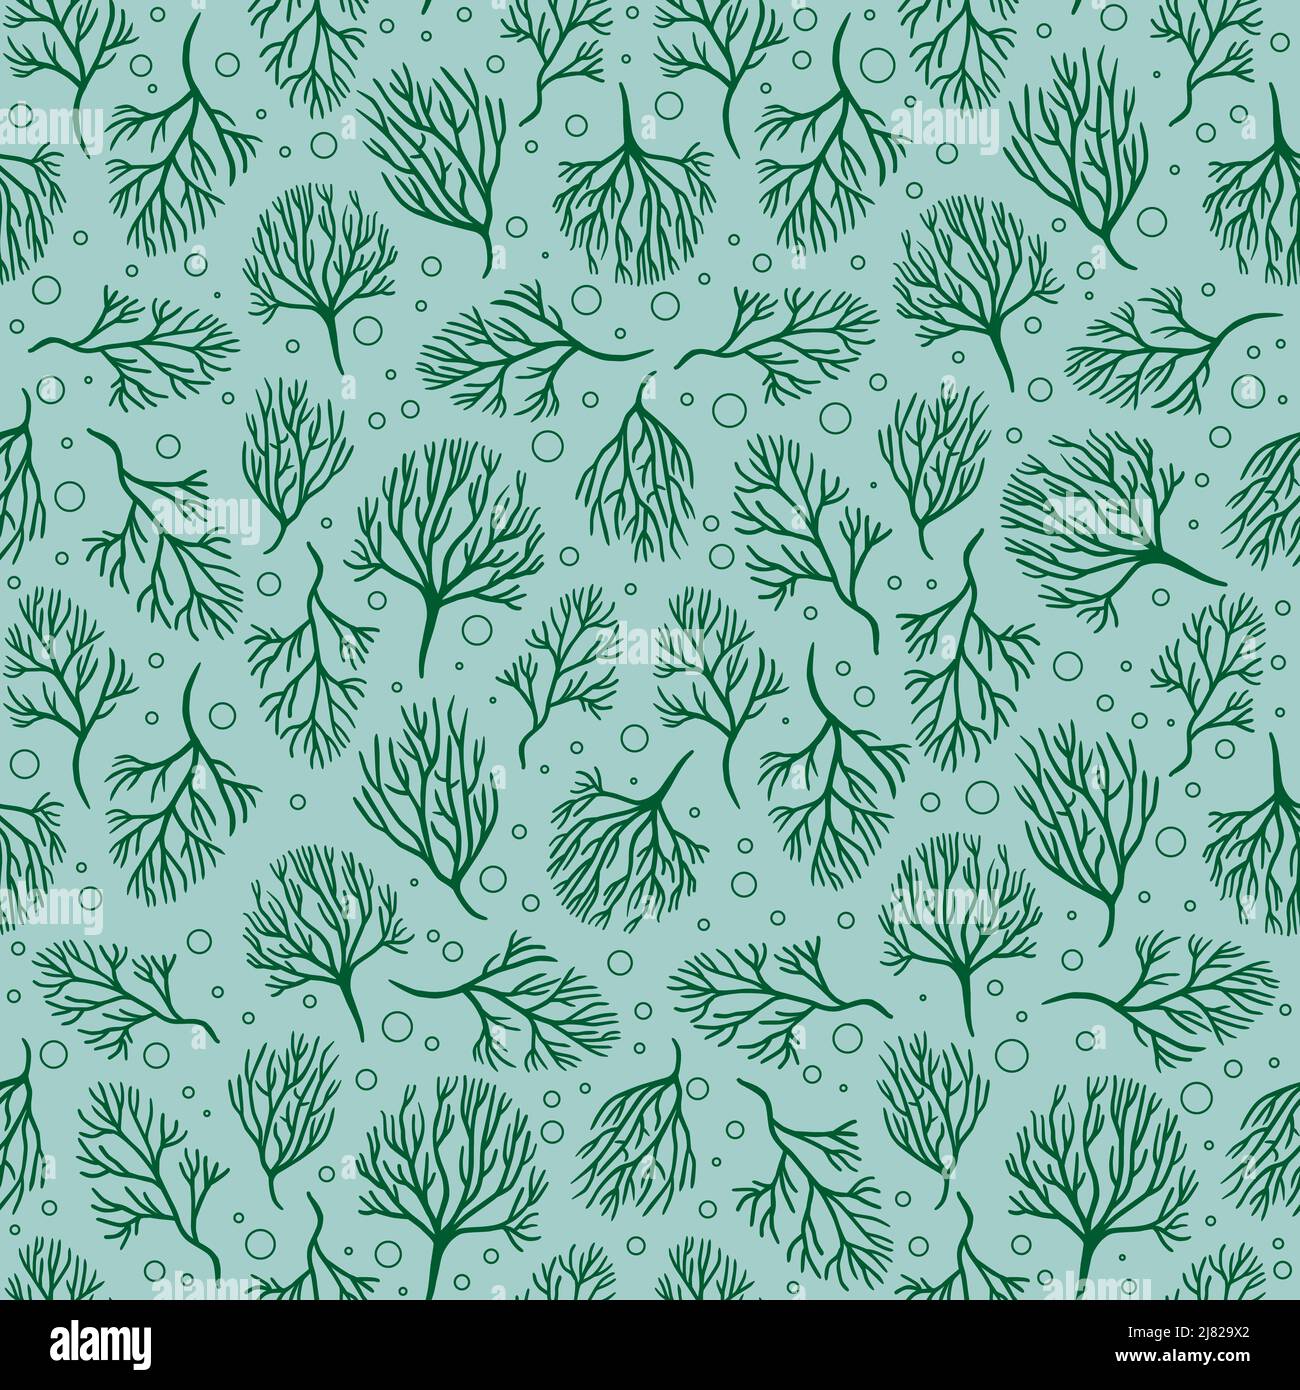 A seamless repeating pattern using a sea kelp motif Stock Photo